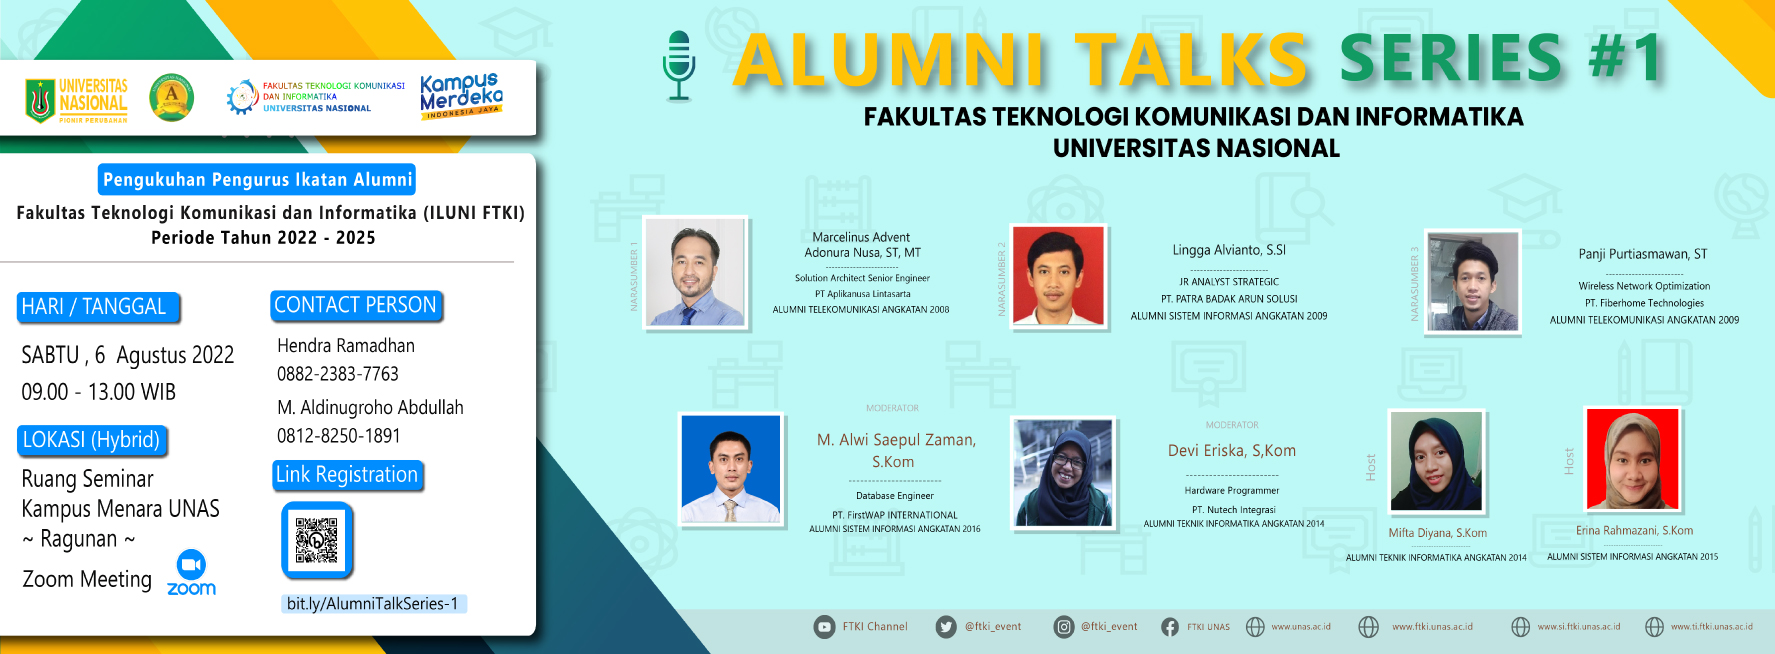 Alumni-Talks-Series-#1-FTKI-UNAS